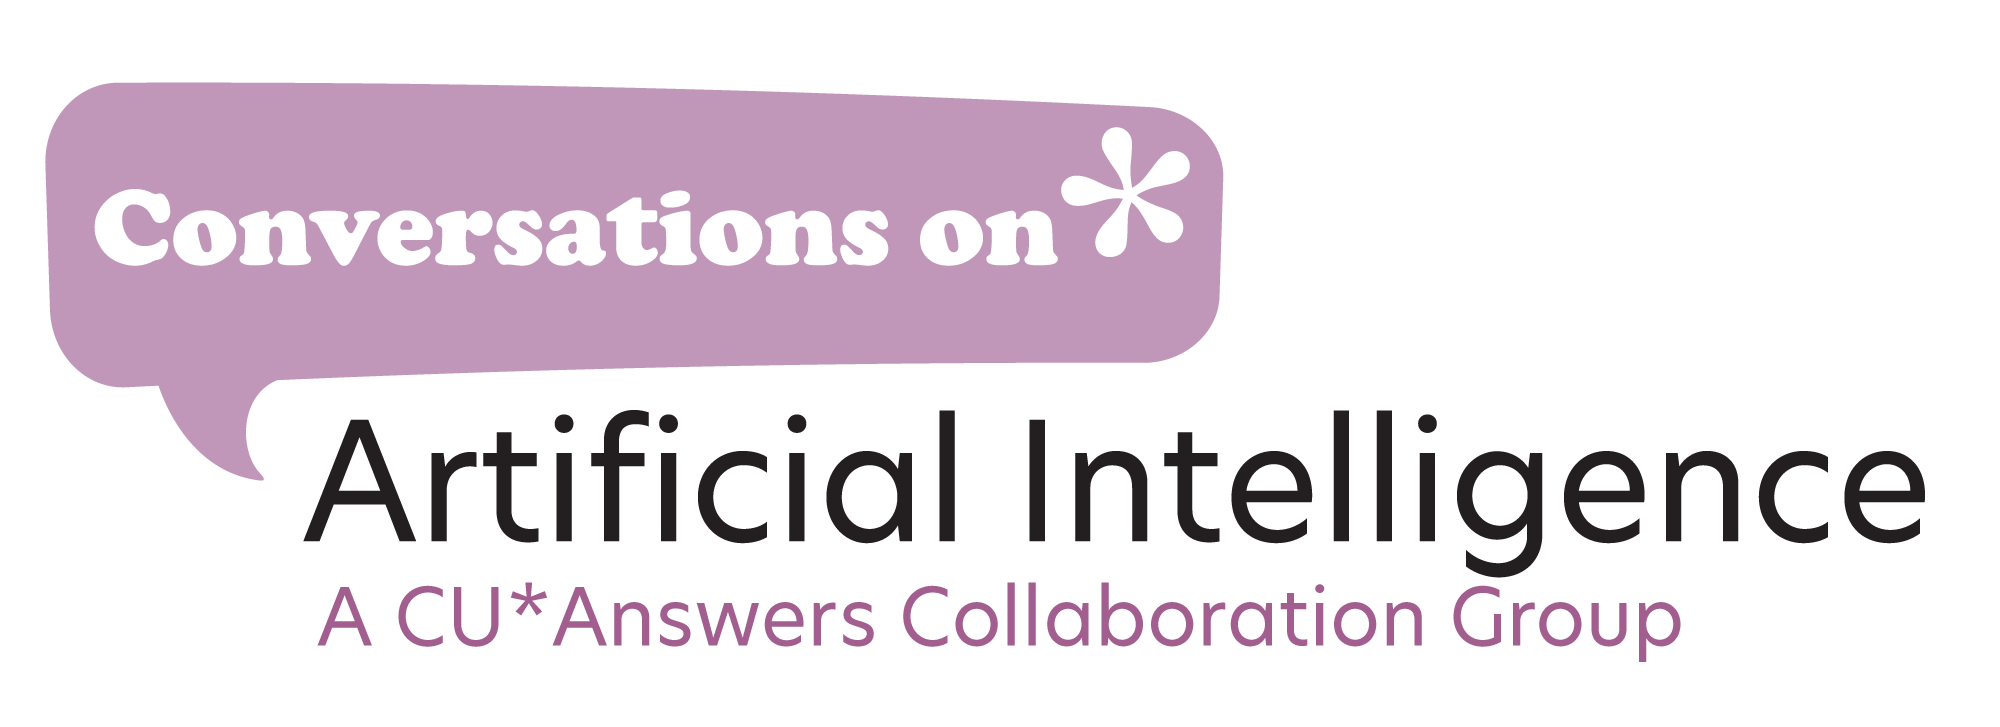 conversations on artificial intelligence logo